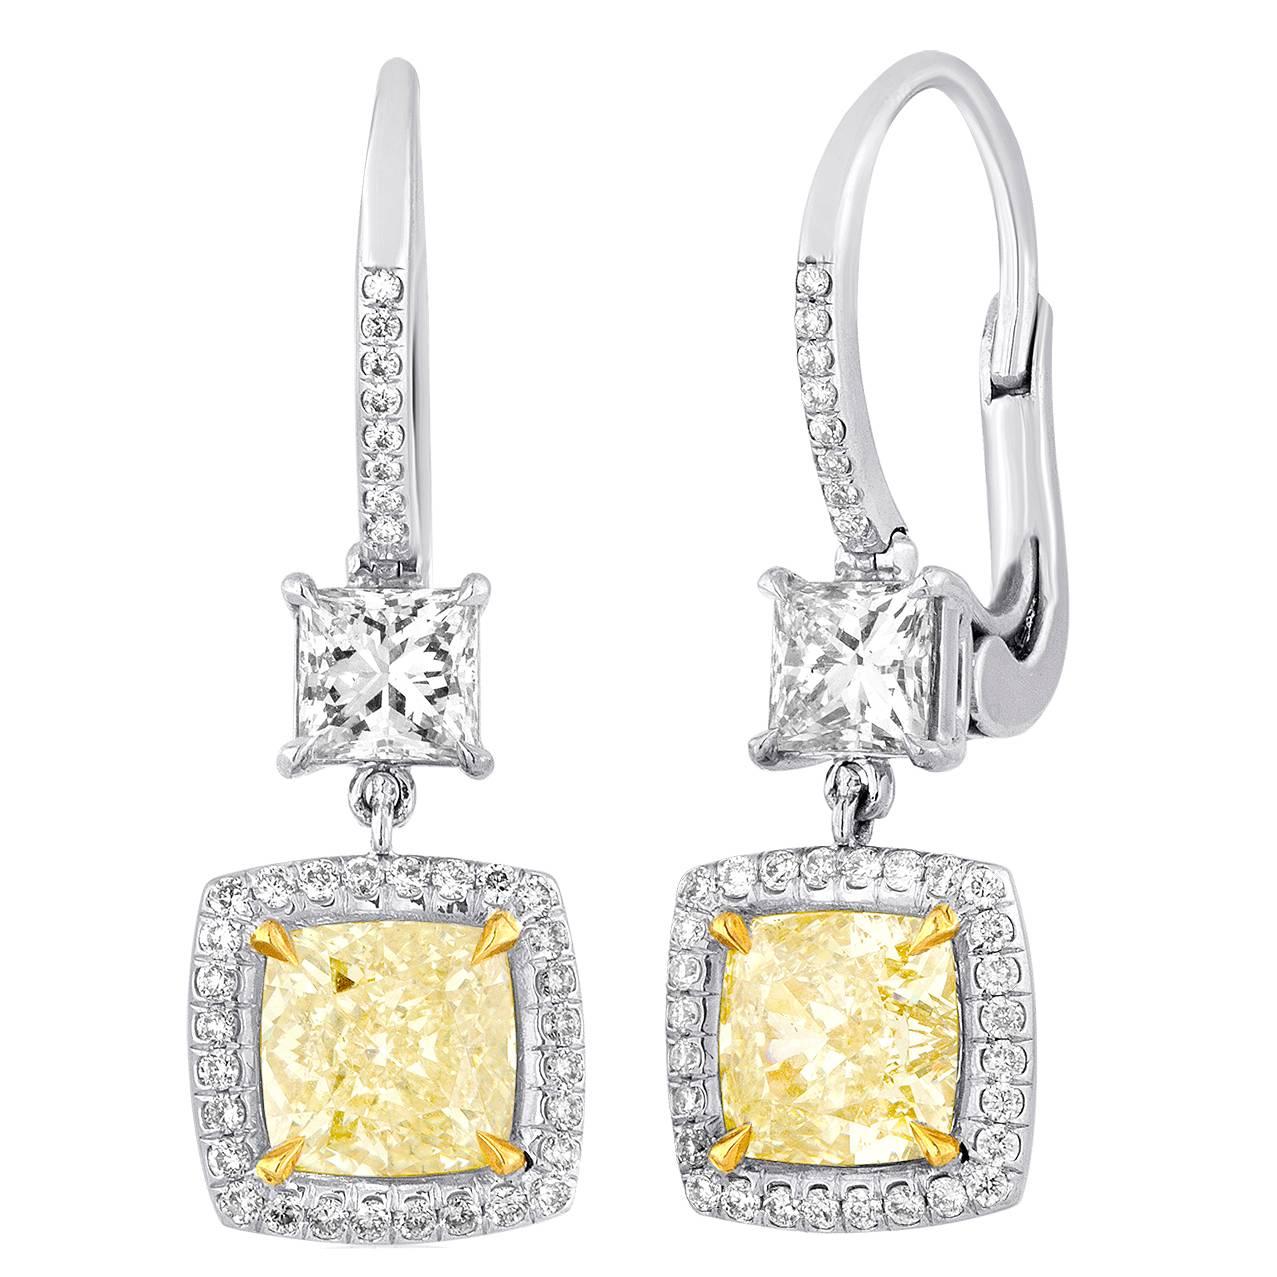 GIA Certified 2.23 Carat Y-Z Princess Cut Diamond Dangle Earrings